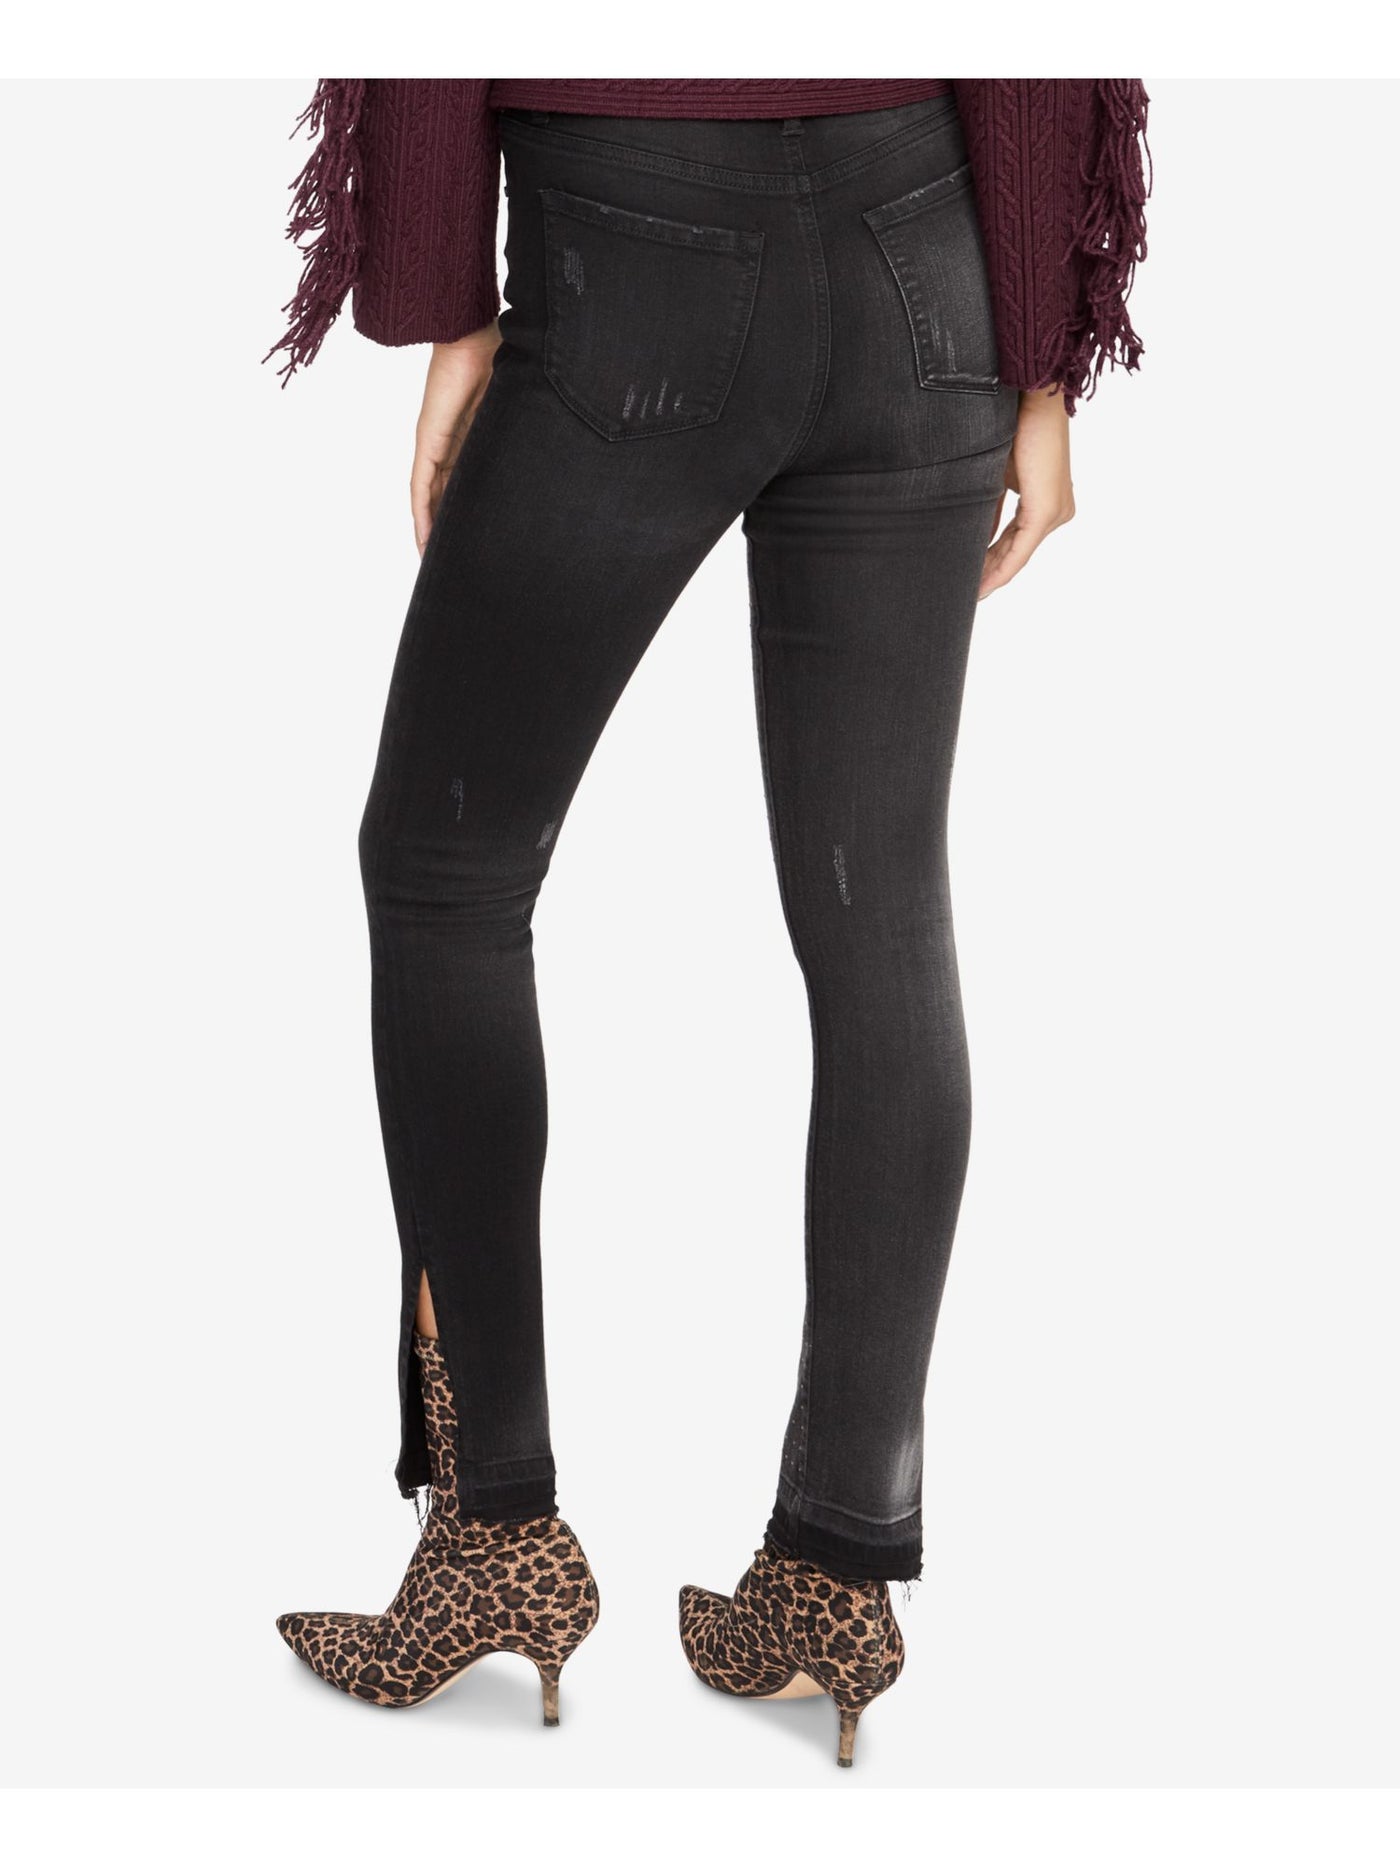 RACHEL ROY Womens Black Embellished Pocketed Skinny Jeans Size: 31